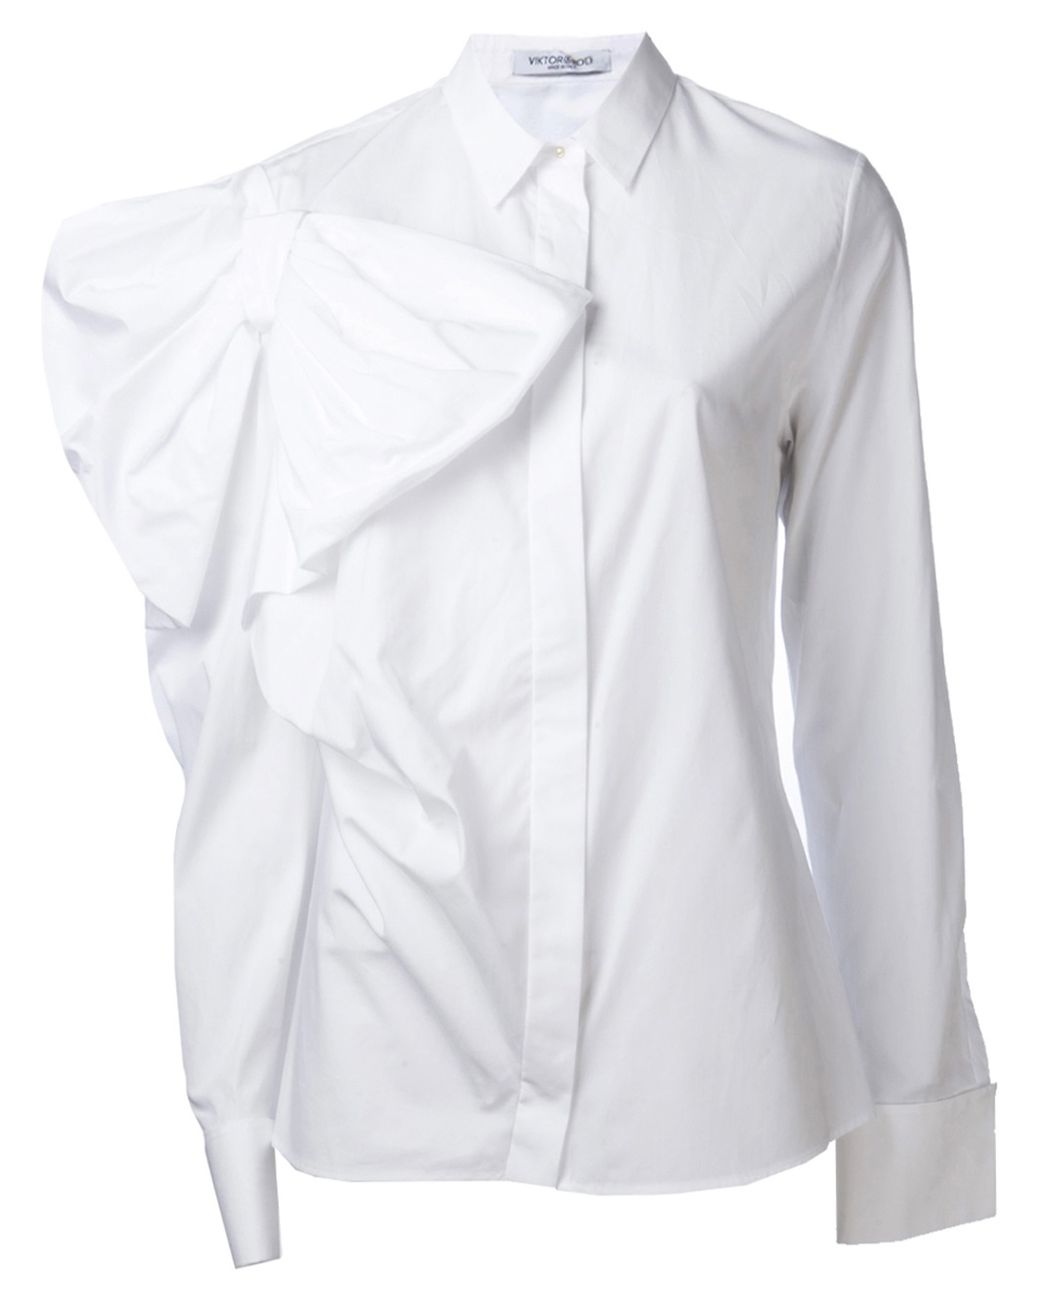 Viktor & Rolf Gathered Bow Shirt in White | Lyst